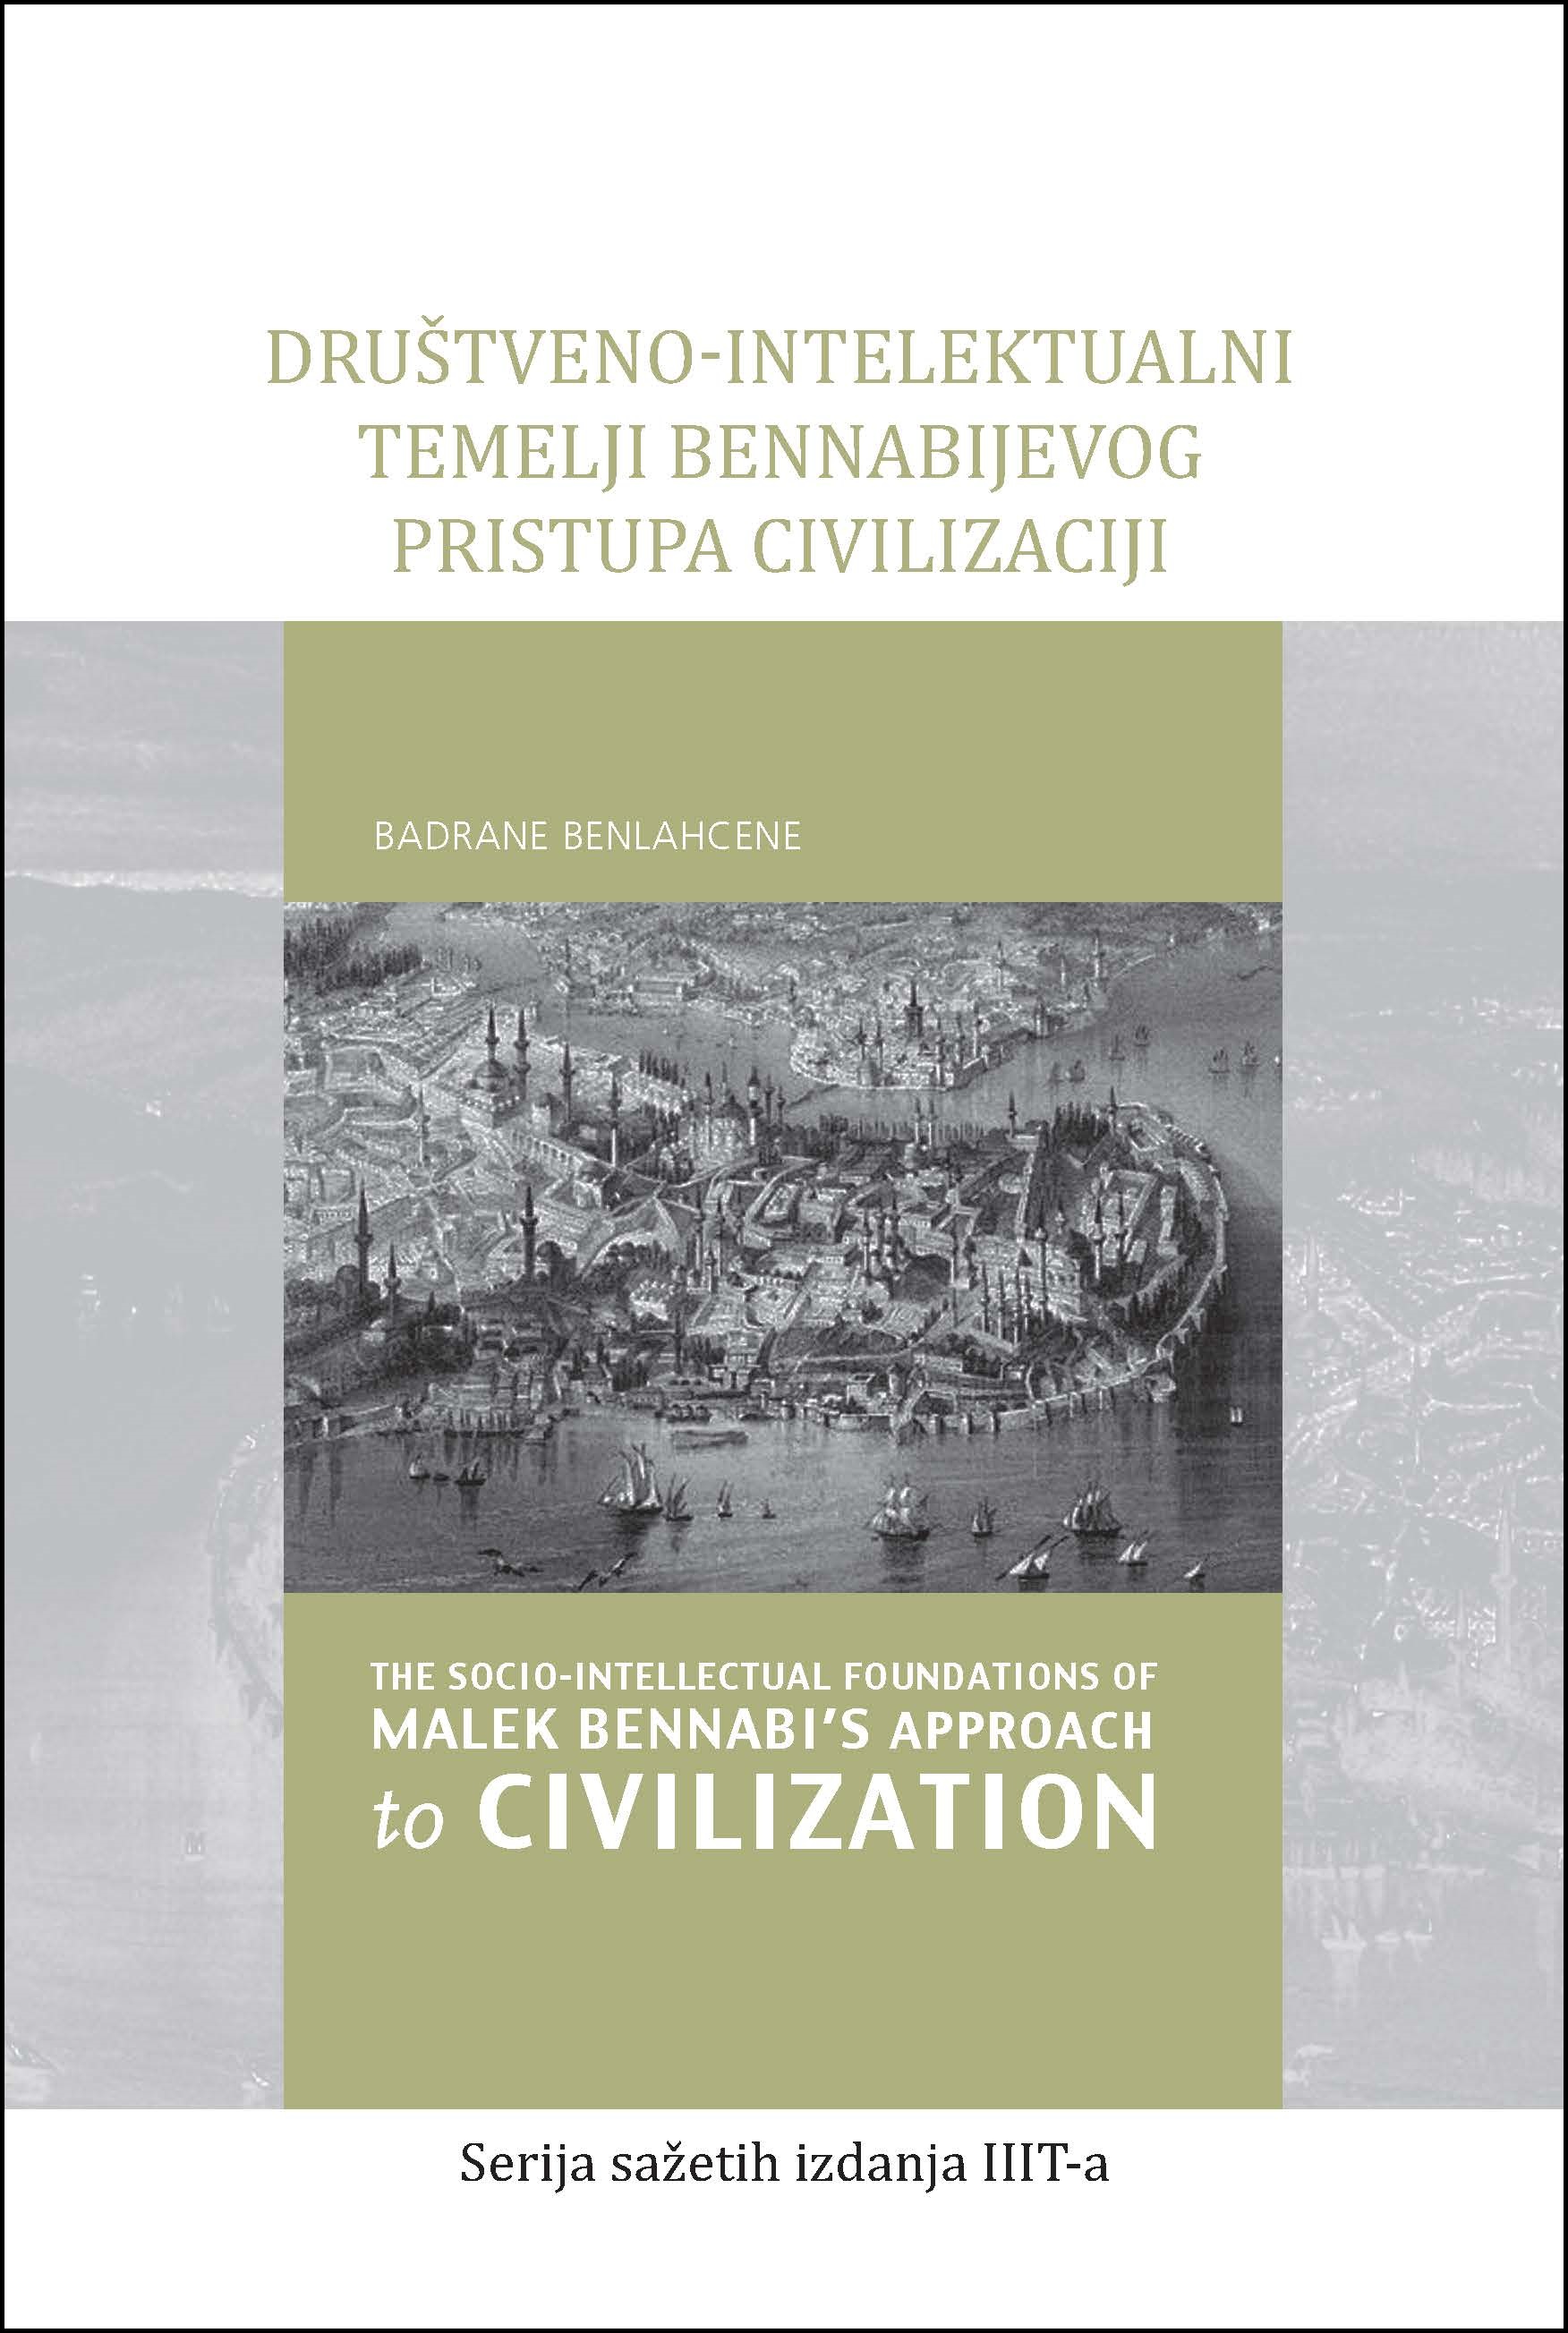 Bosnian: Društveno-intelektualni temelji Bennabijevog pristupa civilizaciji (Book-in-Brief: The Socio-Intellectual Foundations of Malek Bennabi’s Approach to Civilization)